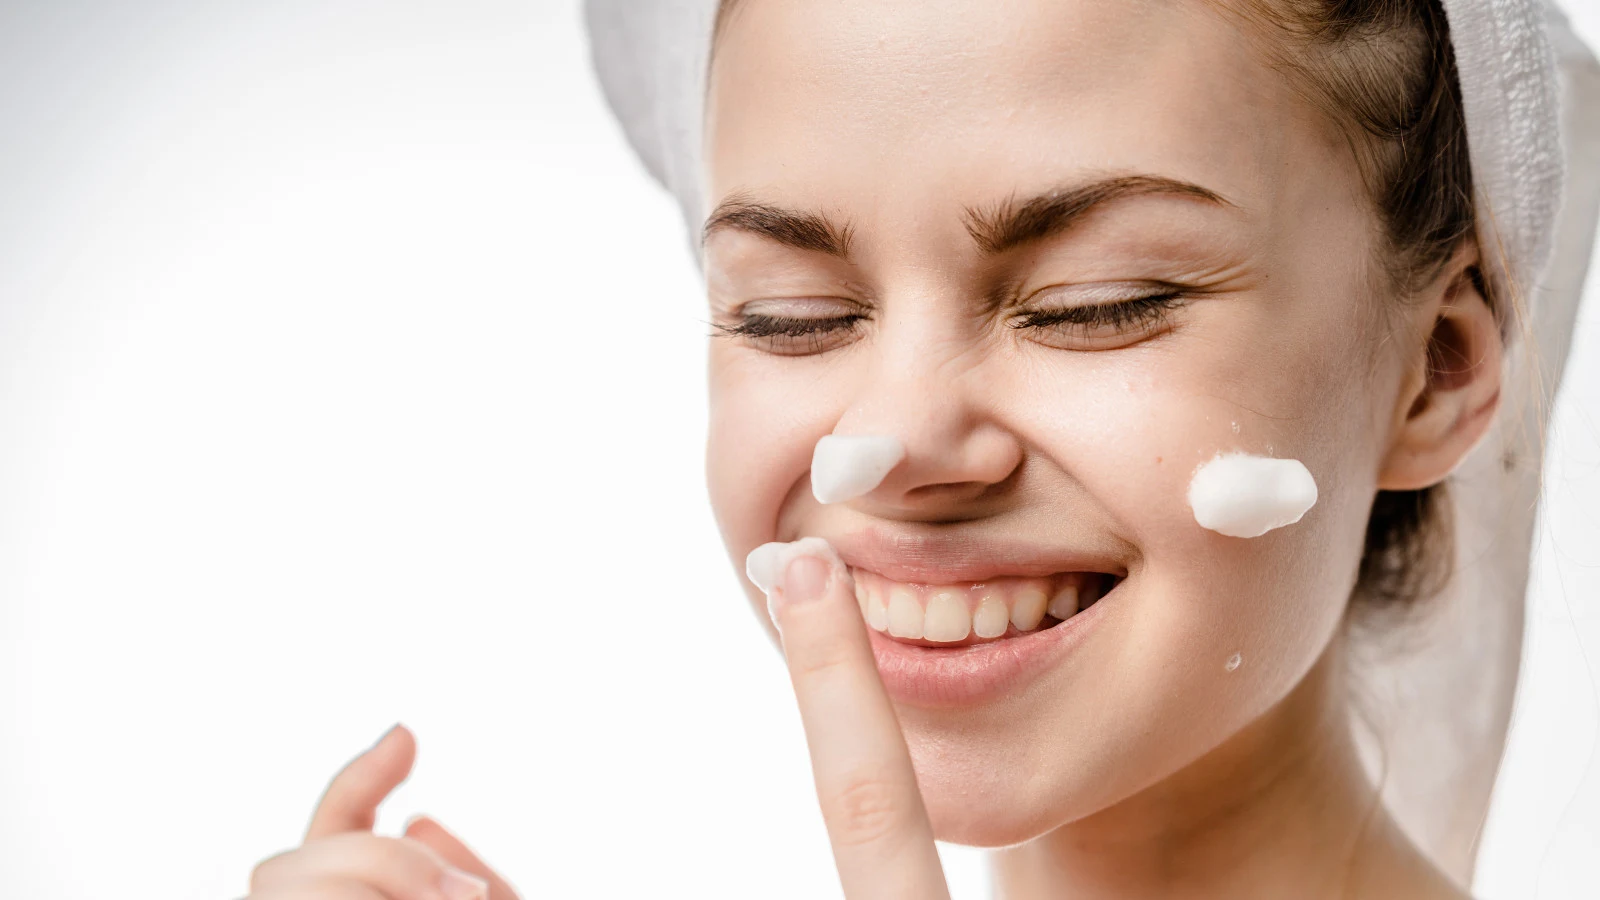 Woman smiling while applying shaving cream